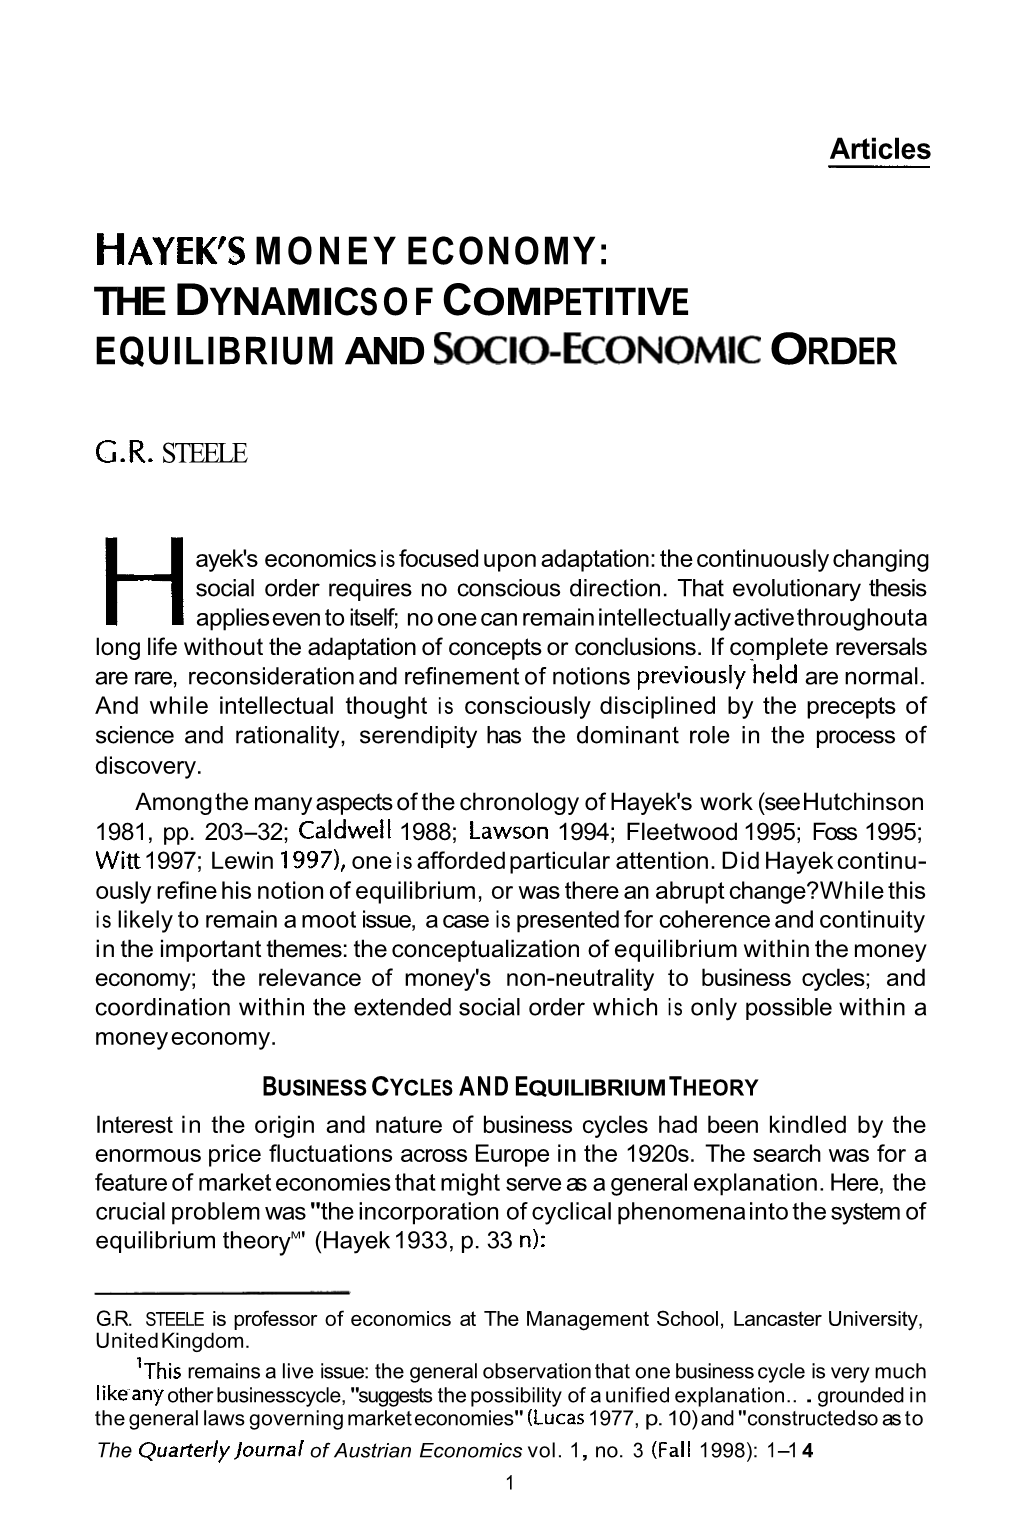 Hayek's Money Economy: the Dynamics of Competitive Equilibrium and Socio-Economic Order